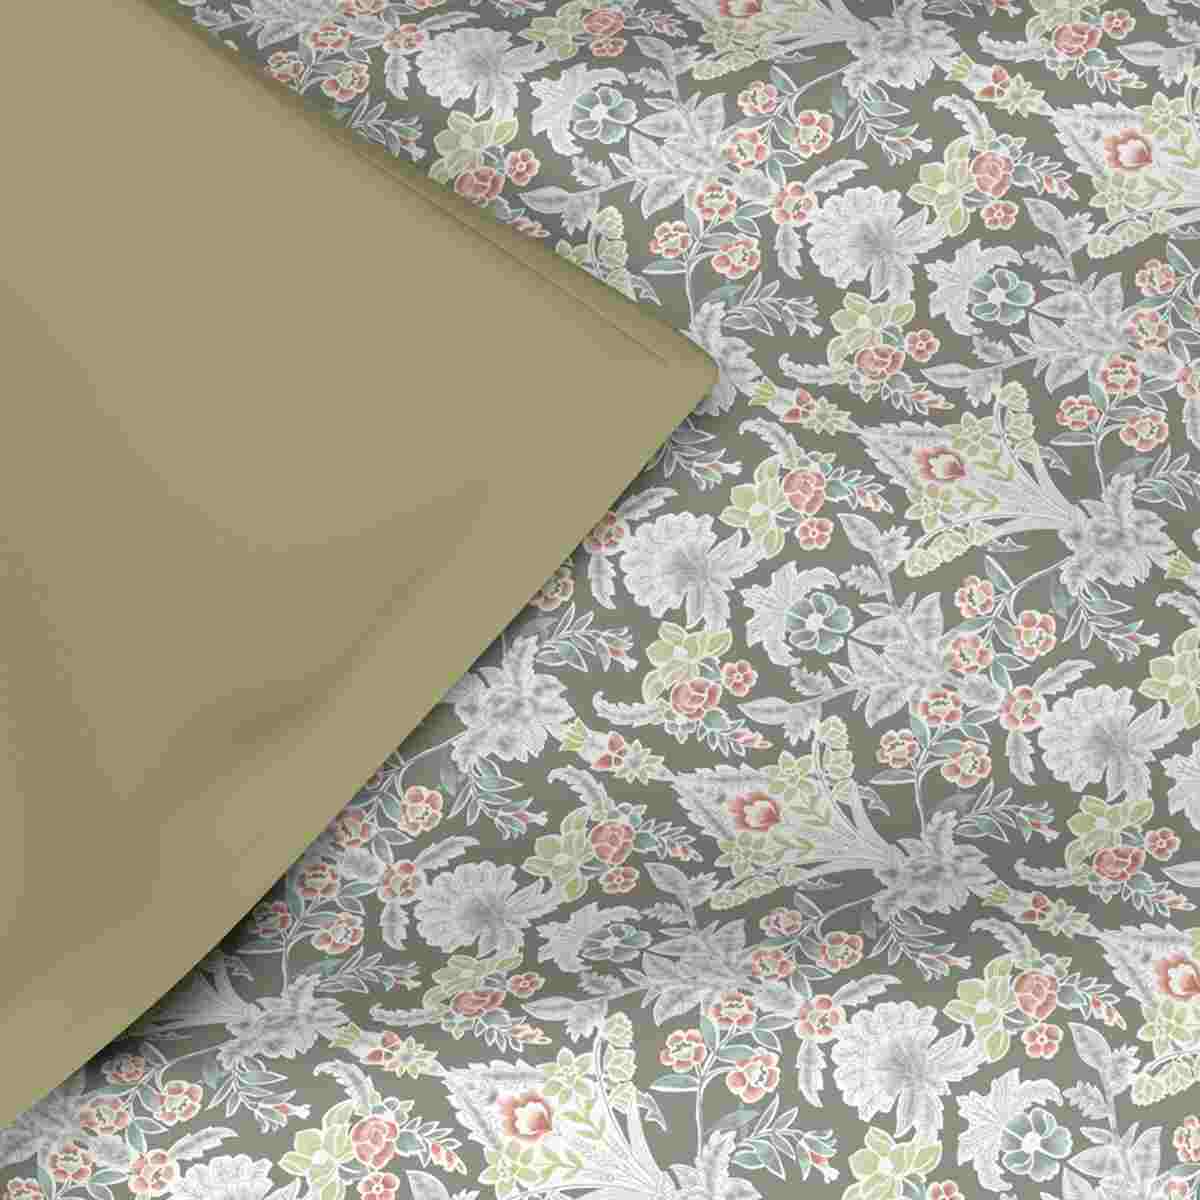 Regency Dark Flora Summer AC Quilt/Quilted Bed Cover/Comforter Grey